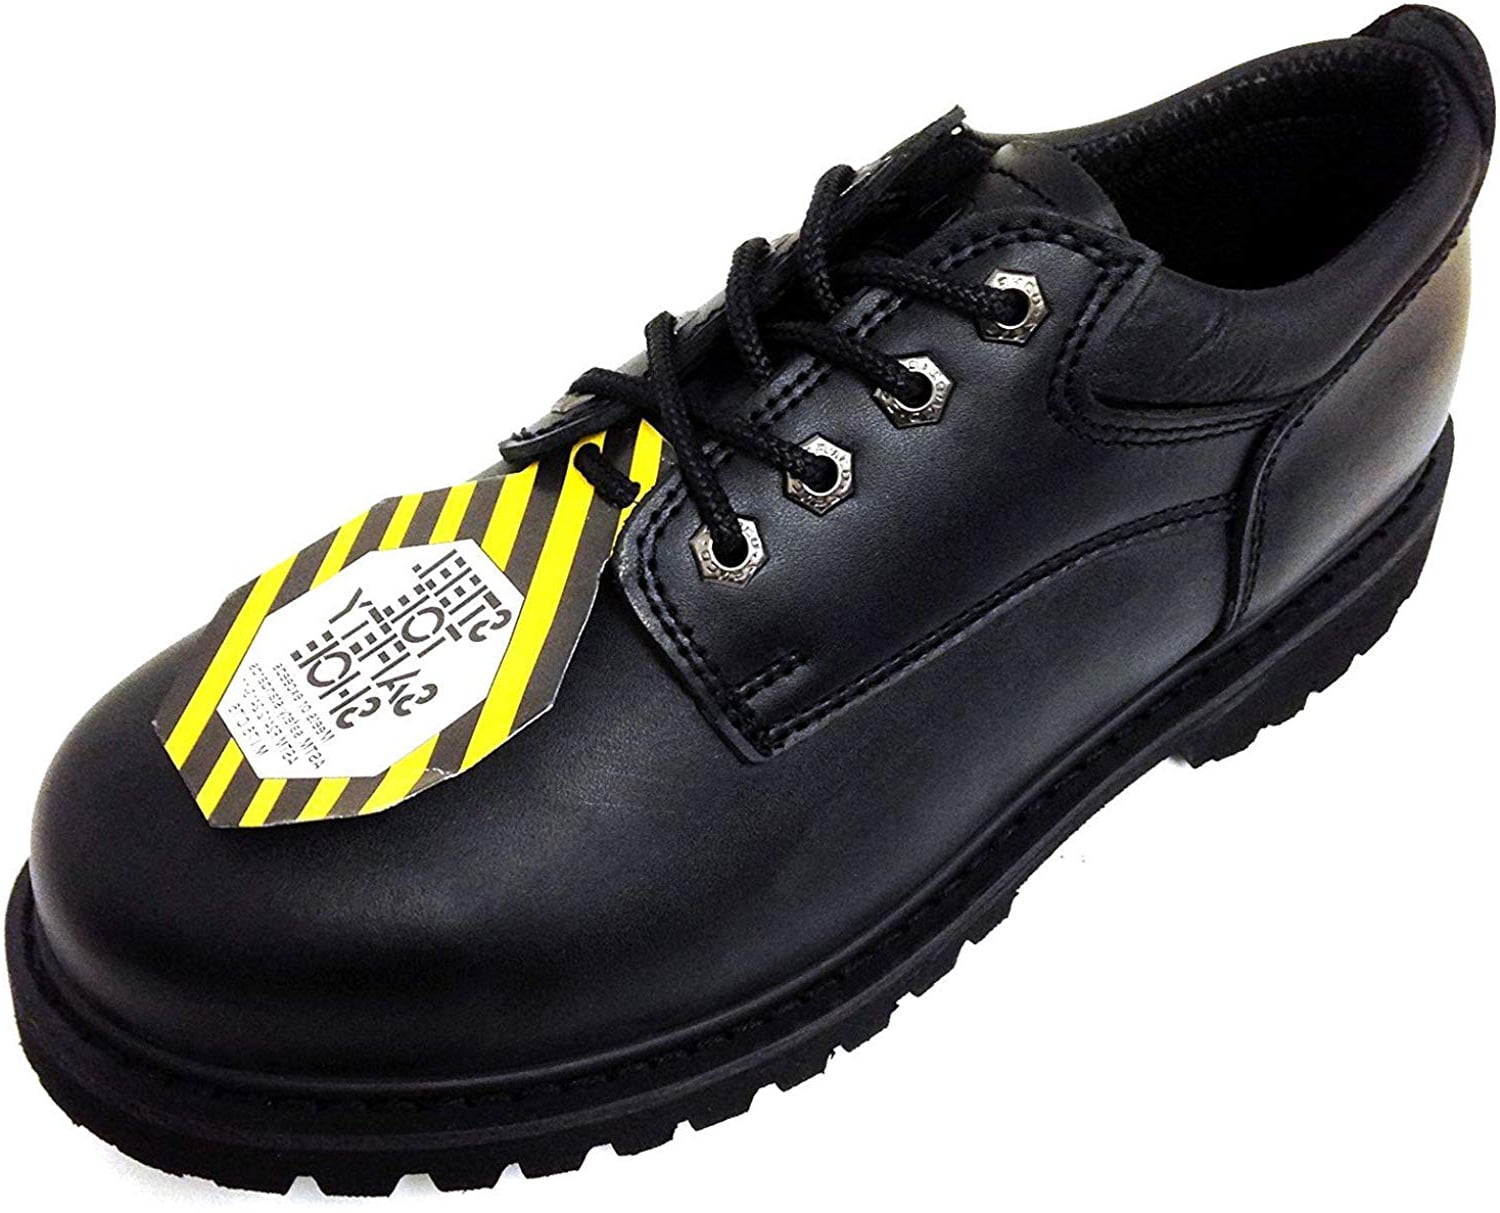 steel toe oil resistant shoes